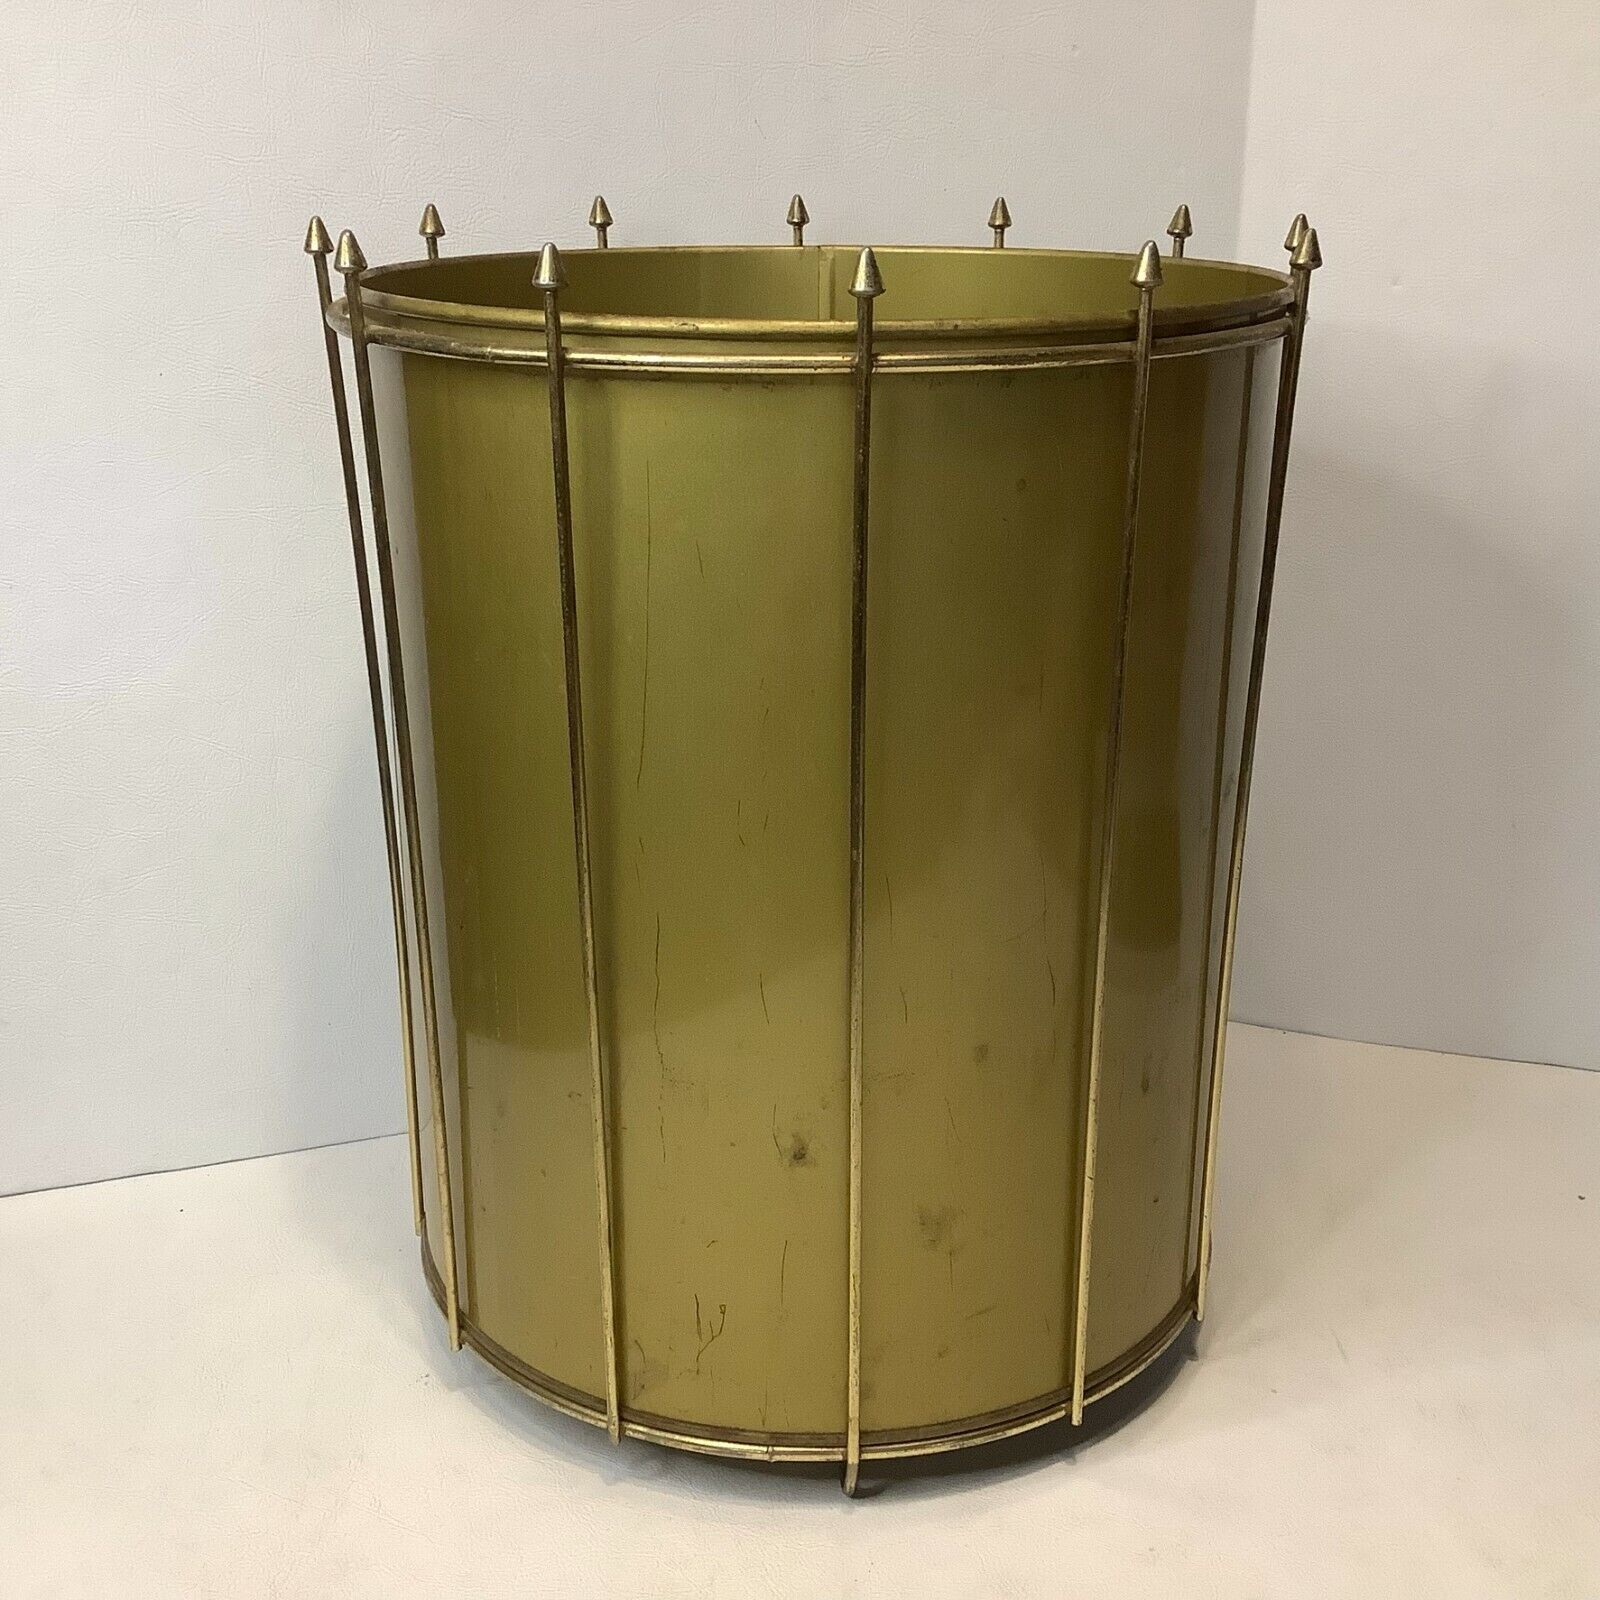 Vintage Mid-Century Modern Metal Caged Trash/Garbage Can Waste Basket Gold 14